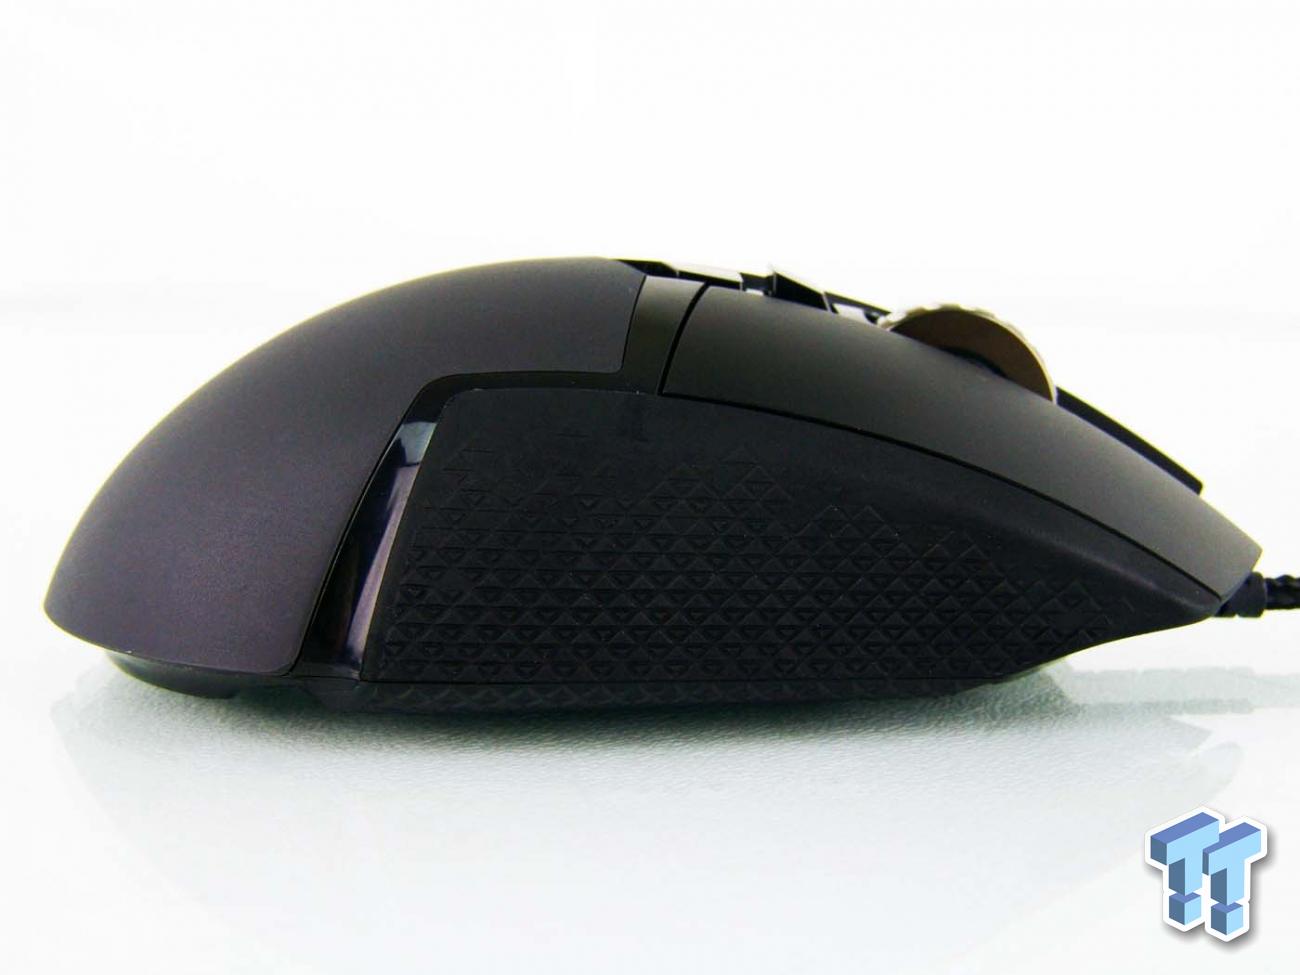 Logitech G502 Proteus Spectrum Tunable RGB Gaming Mouse